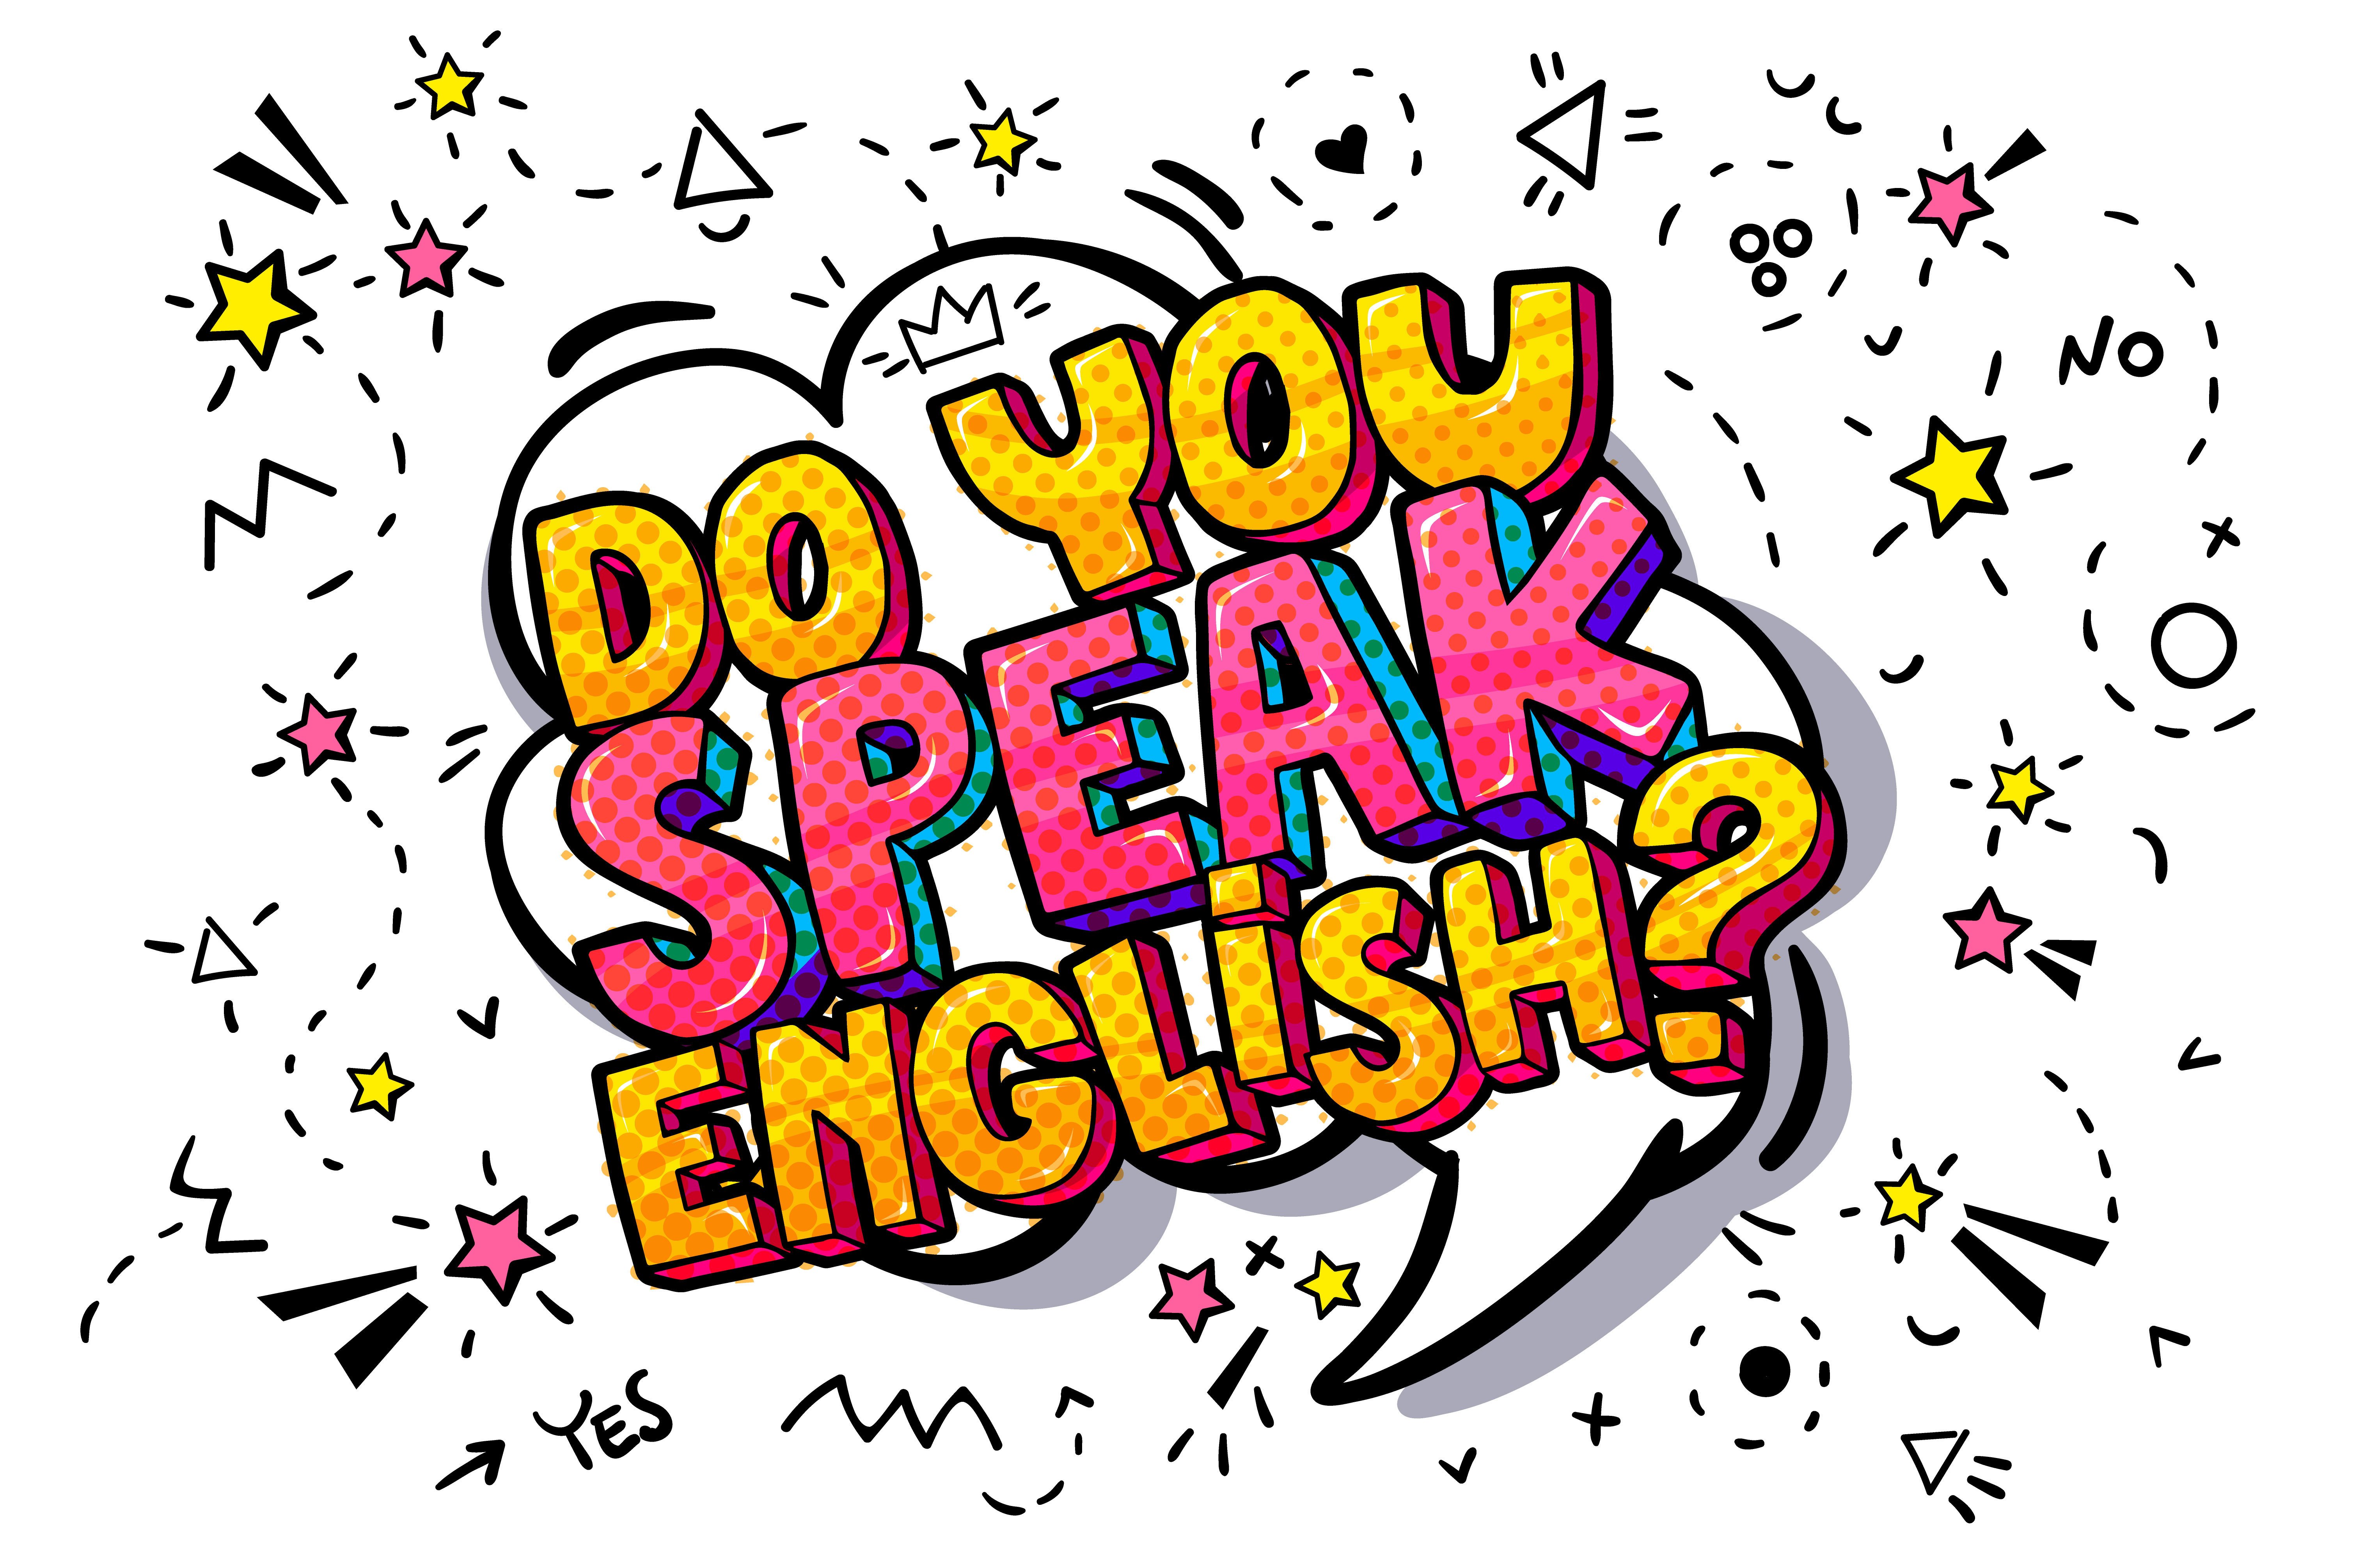 Do you speak good english. Поп арт. Поп арт клипарт. Speak в английском. English is fun картинки.